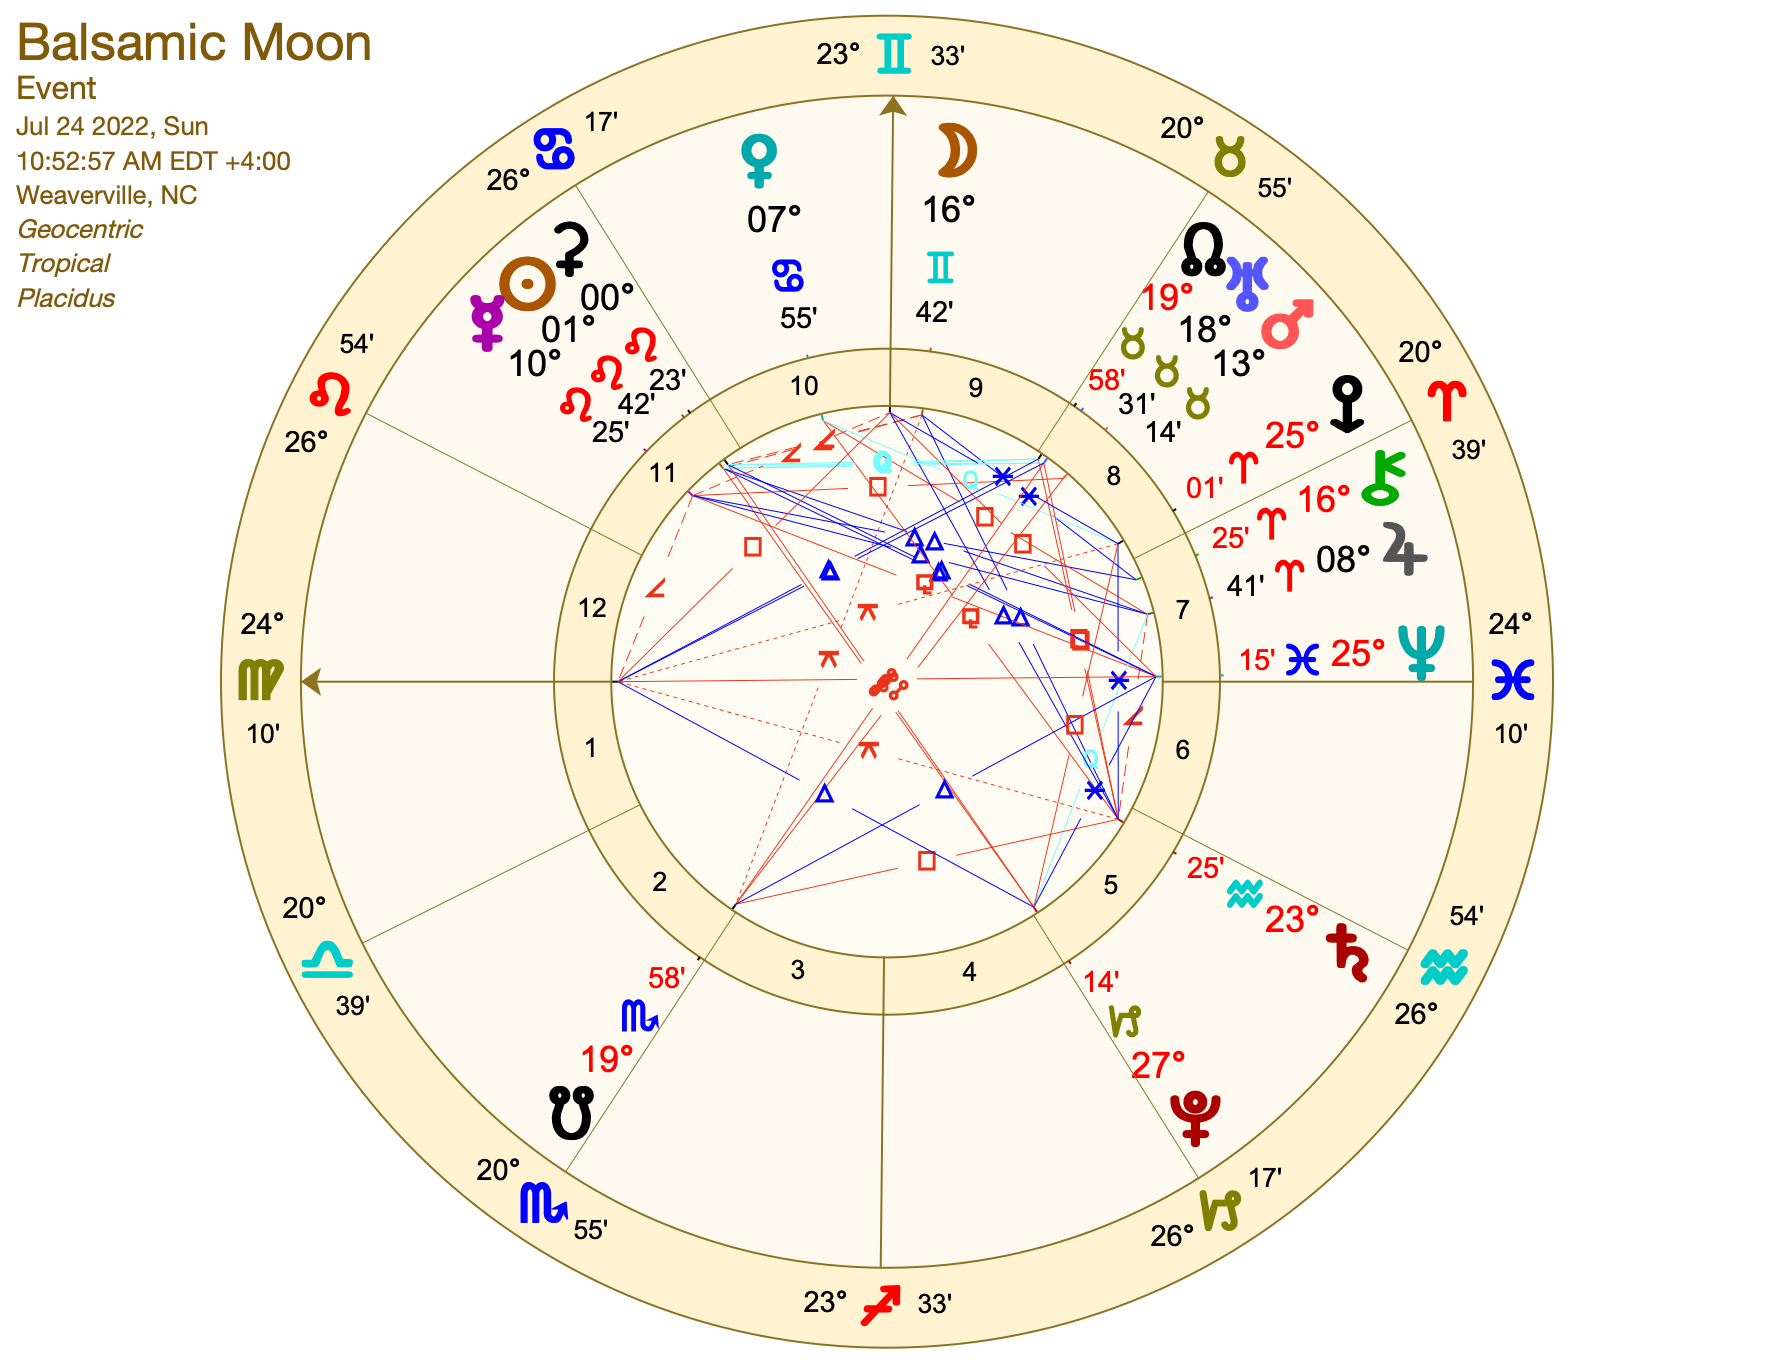 BalsamicMoon Rising Moon Astrology